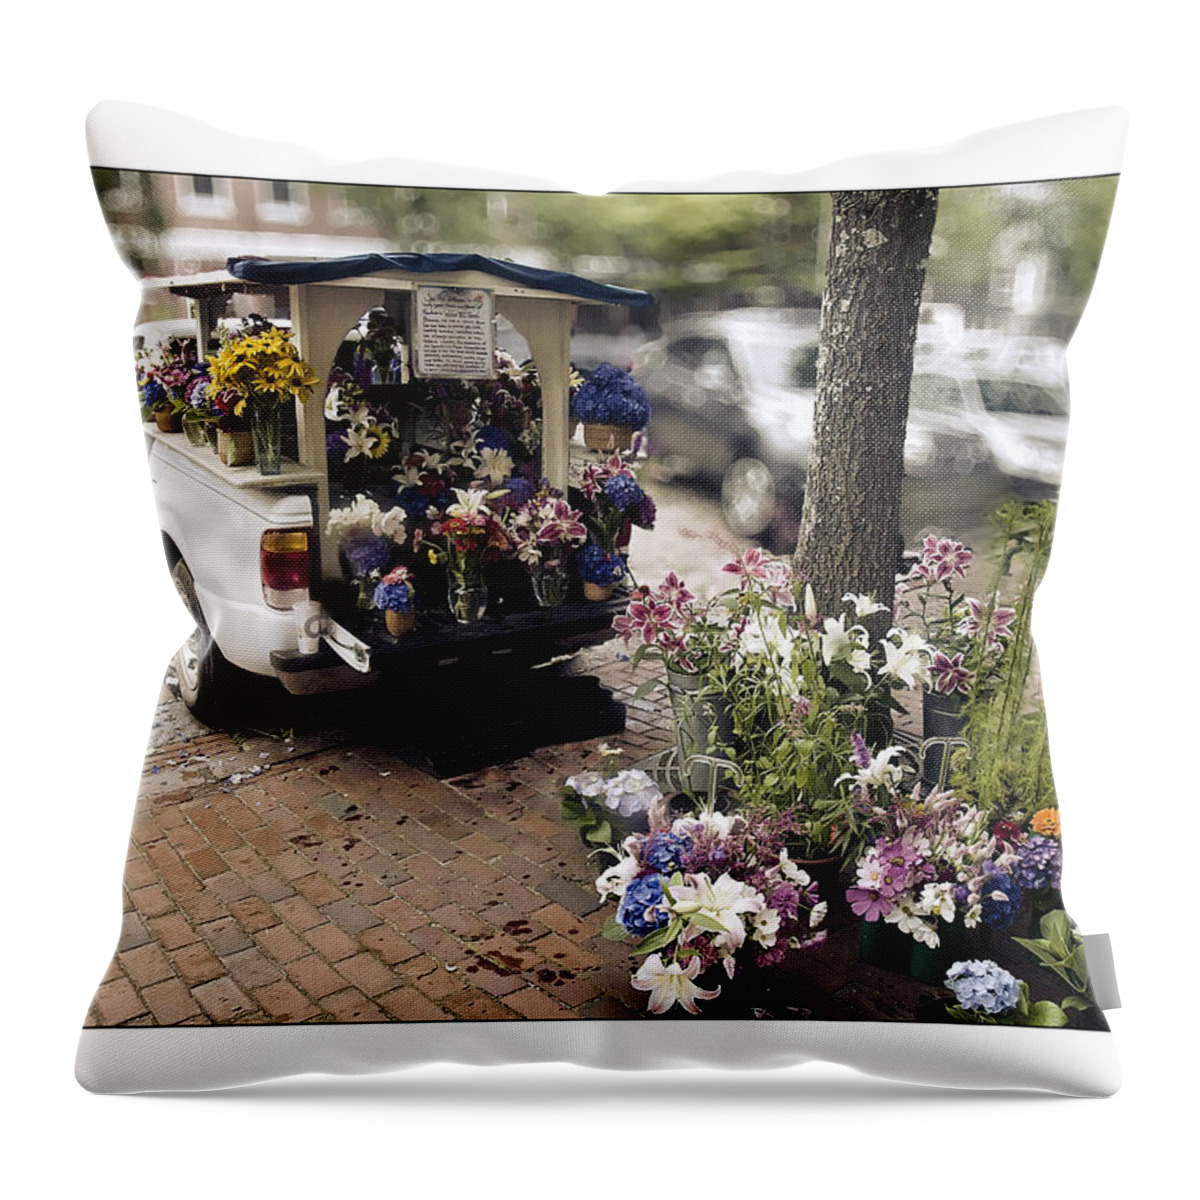 Nantucket Throw Pillow featuring the photograph Flower Truck on Nantucket by Tammy Wetzel